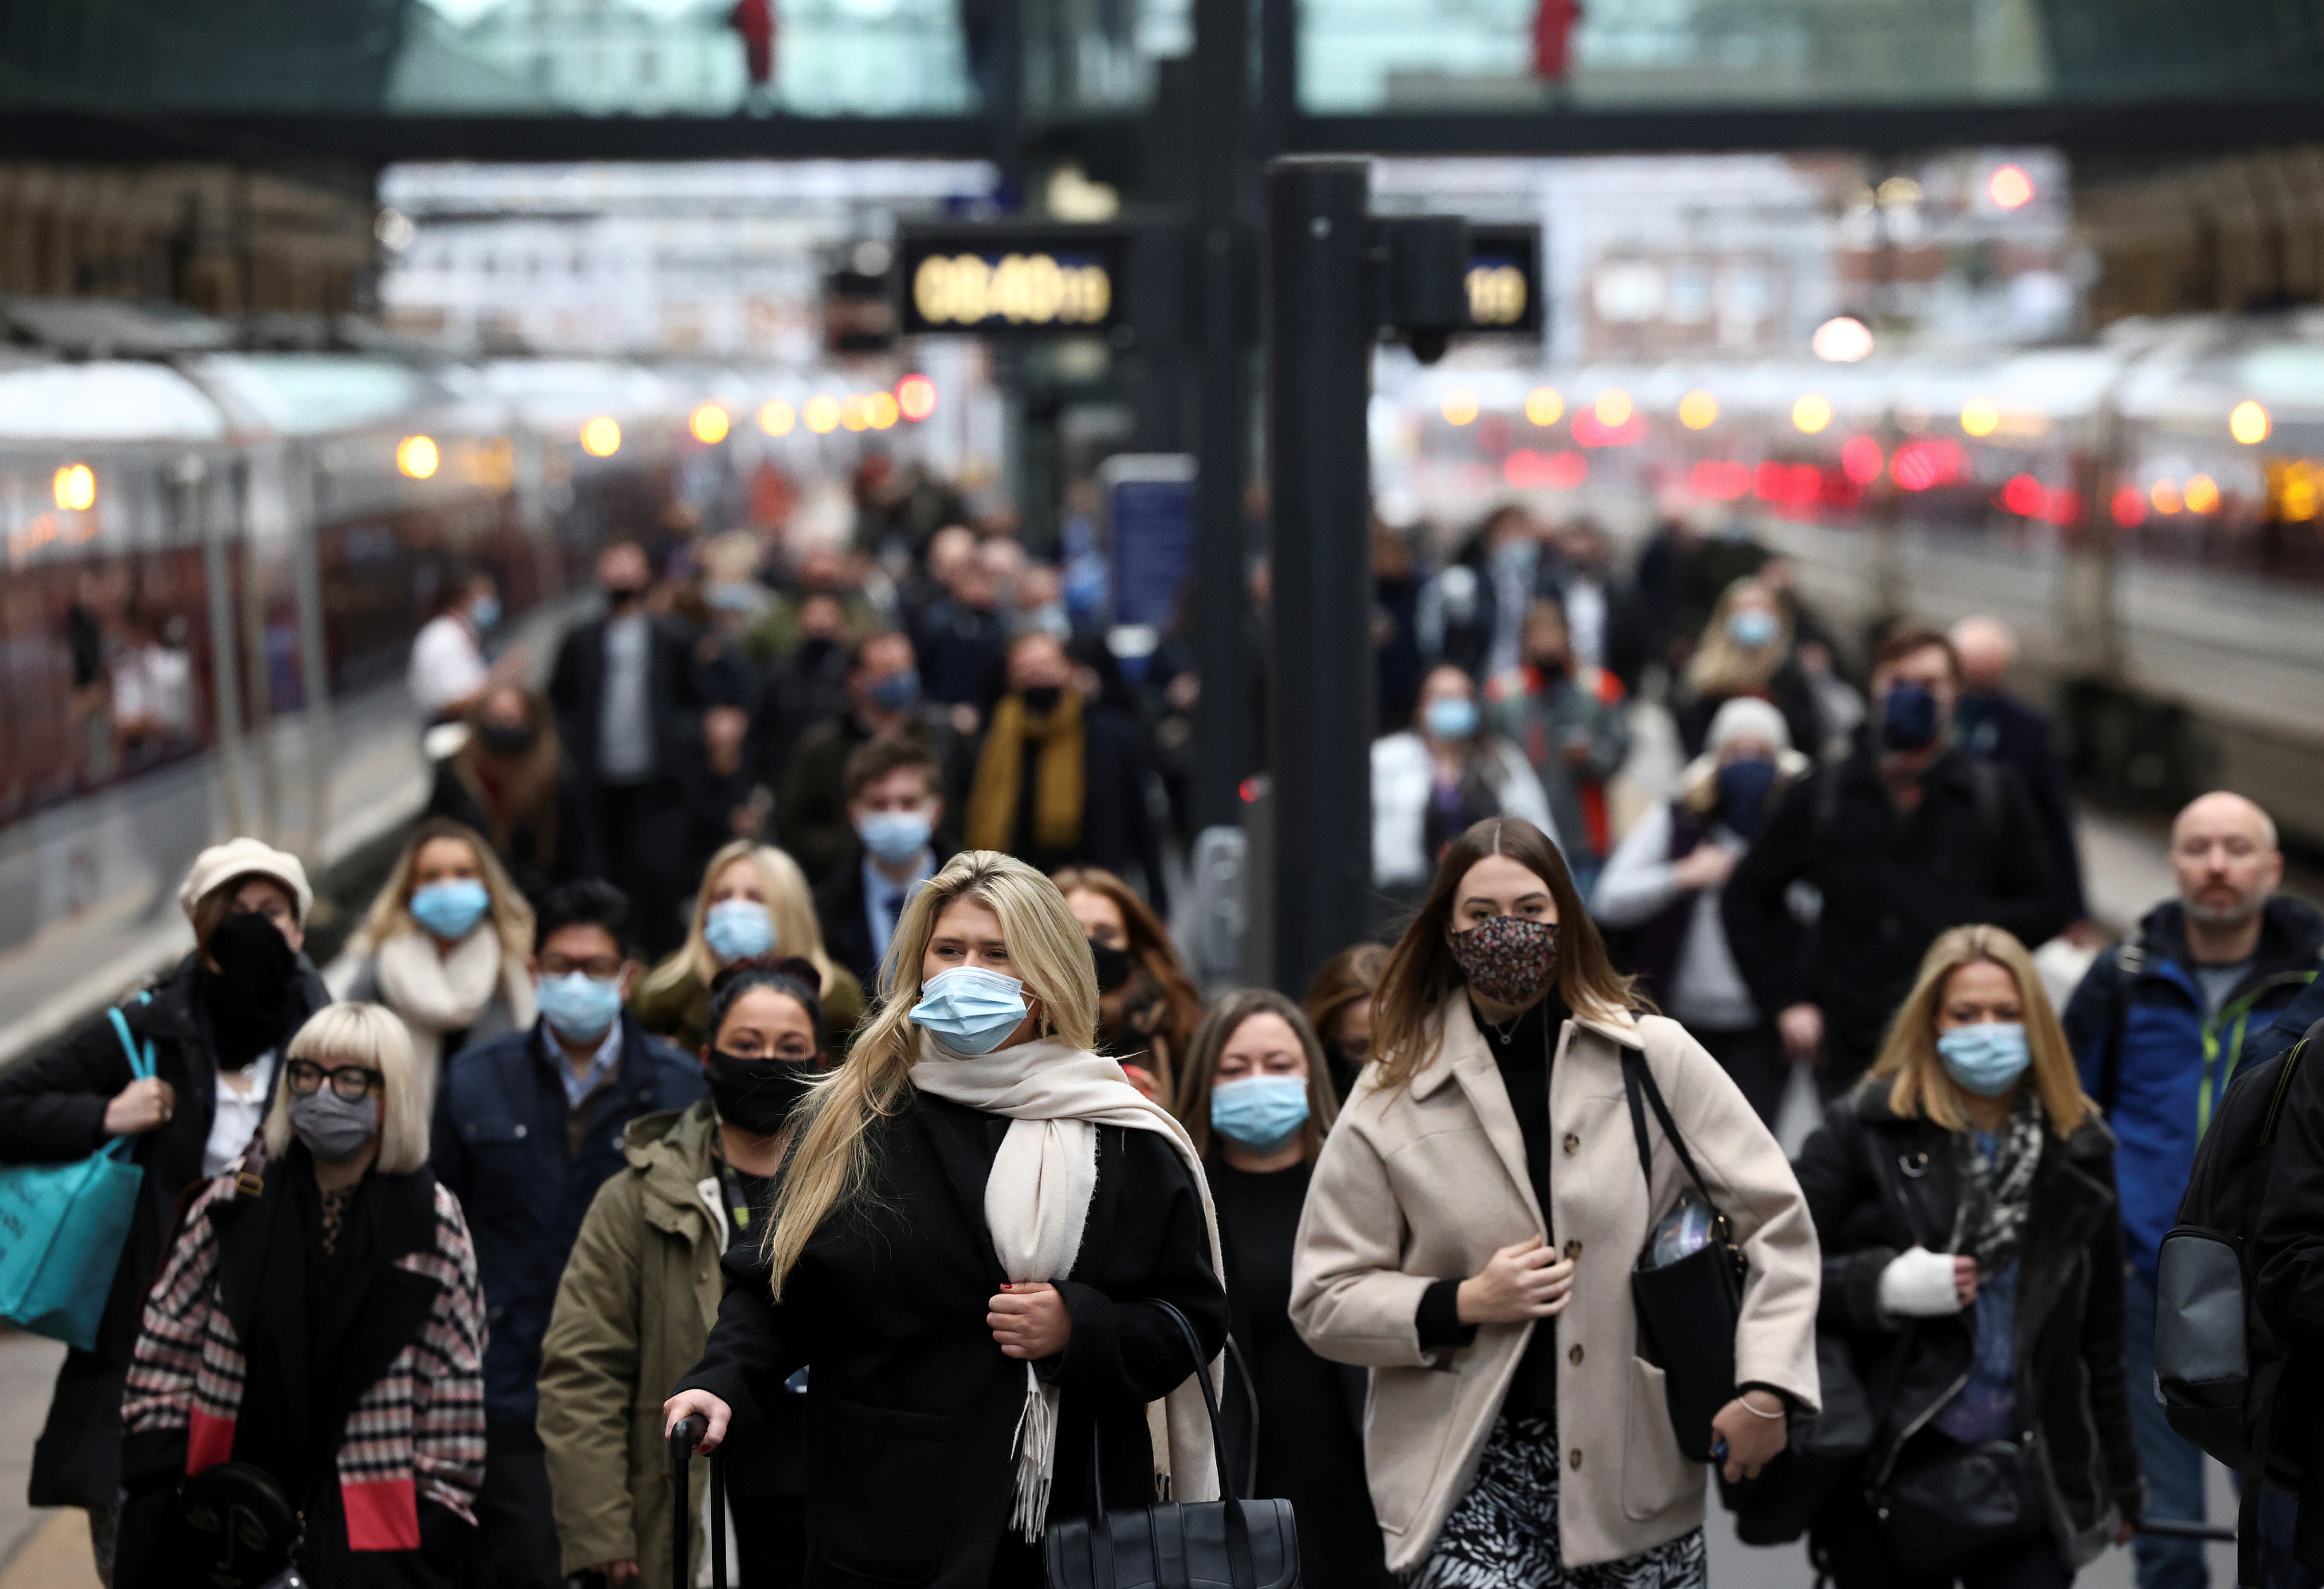 People walk along a platform at Kings Cross train station during morning rush hour, amid the coronavirus disease (COVID-19) outbreak in London, Britain, December 1, 2021. REUTERS/Henry Nicholls